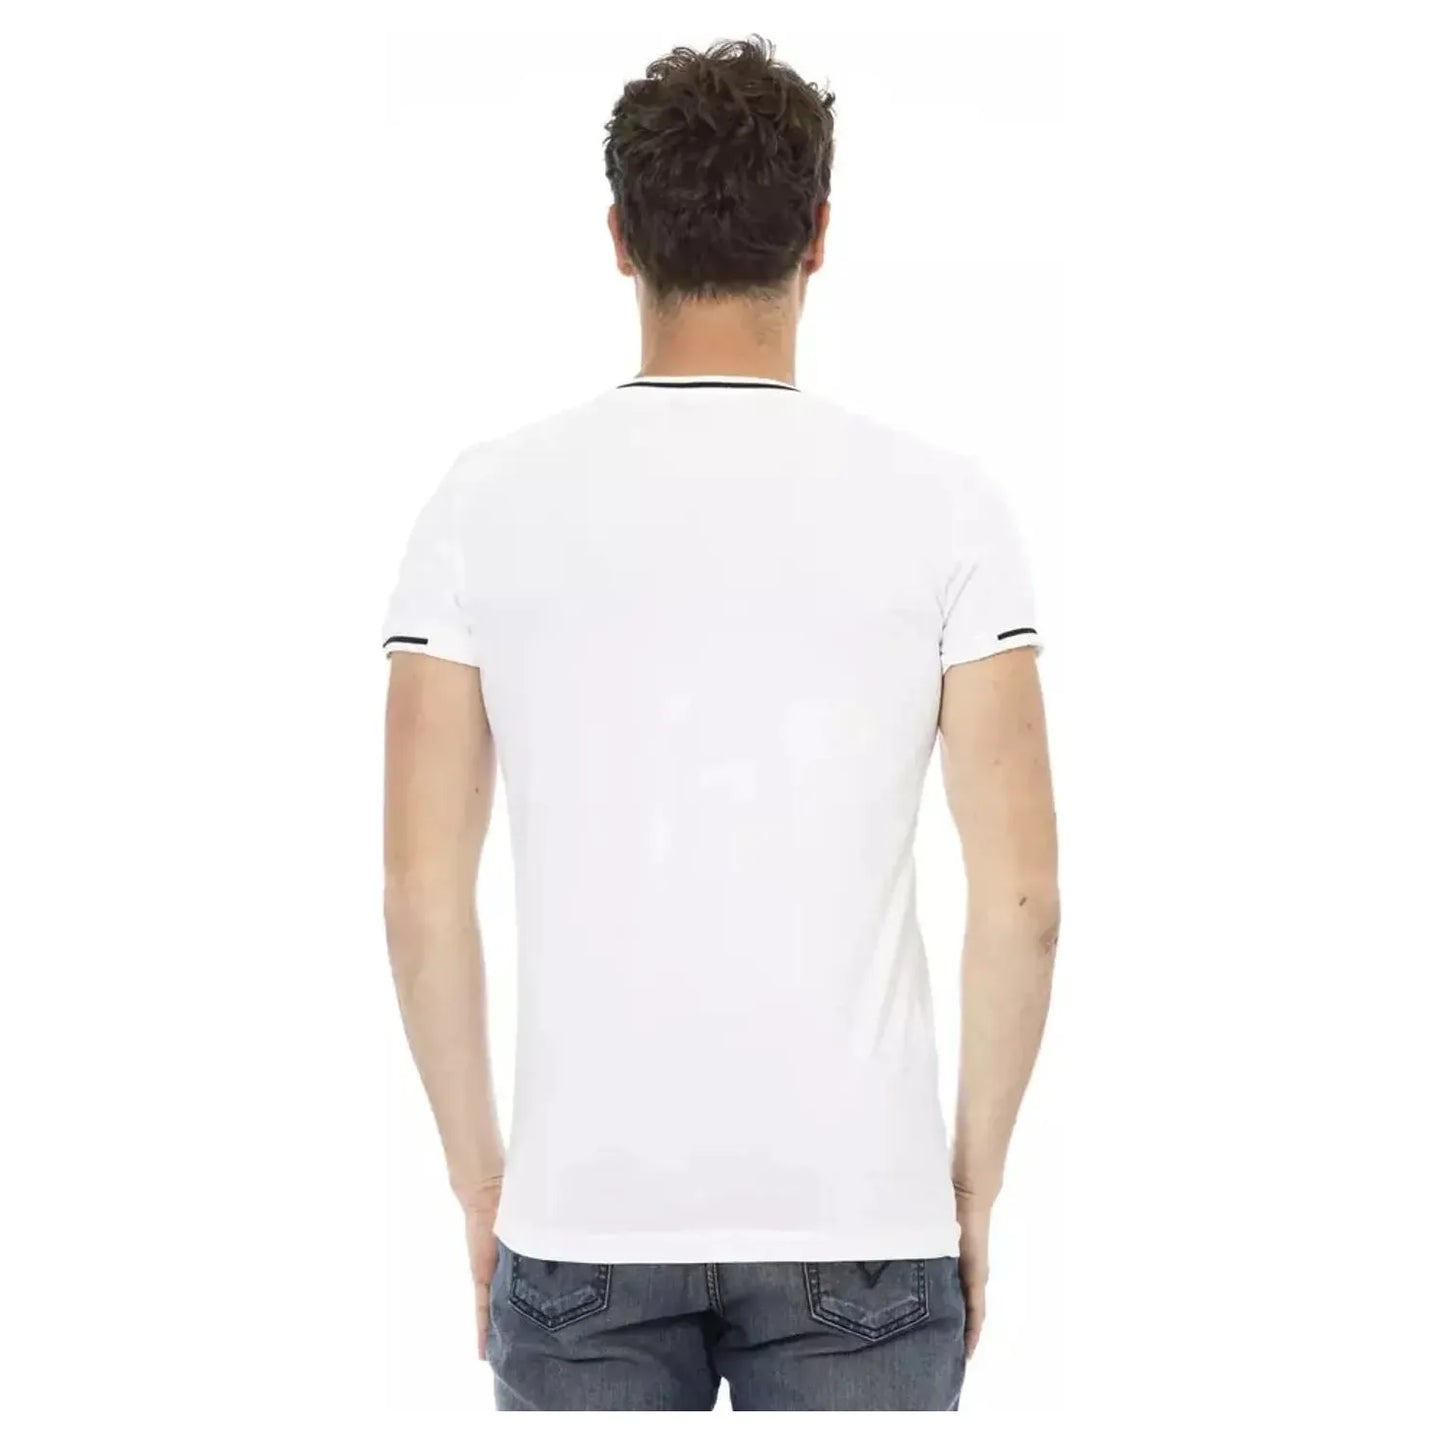 Trussardi Action Sleek V-Neck Tee with Chest Print white-cotton-t-shirt-59